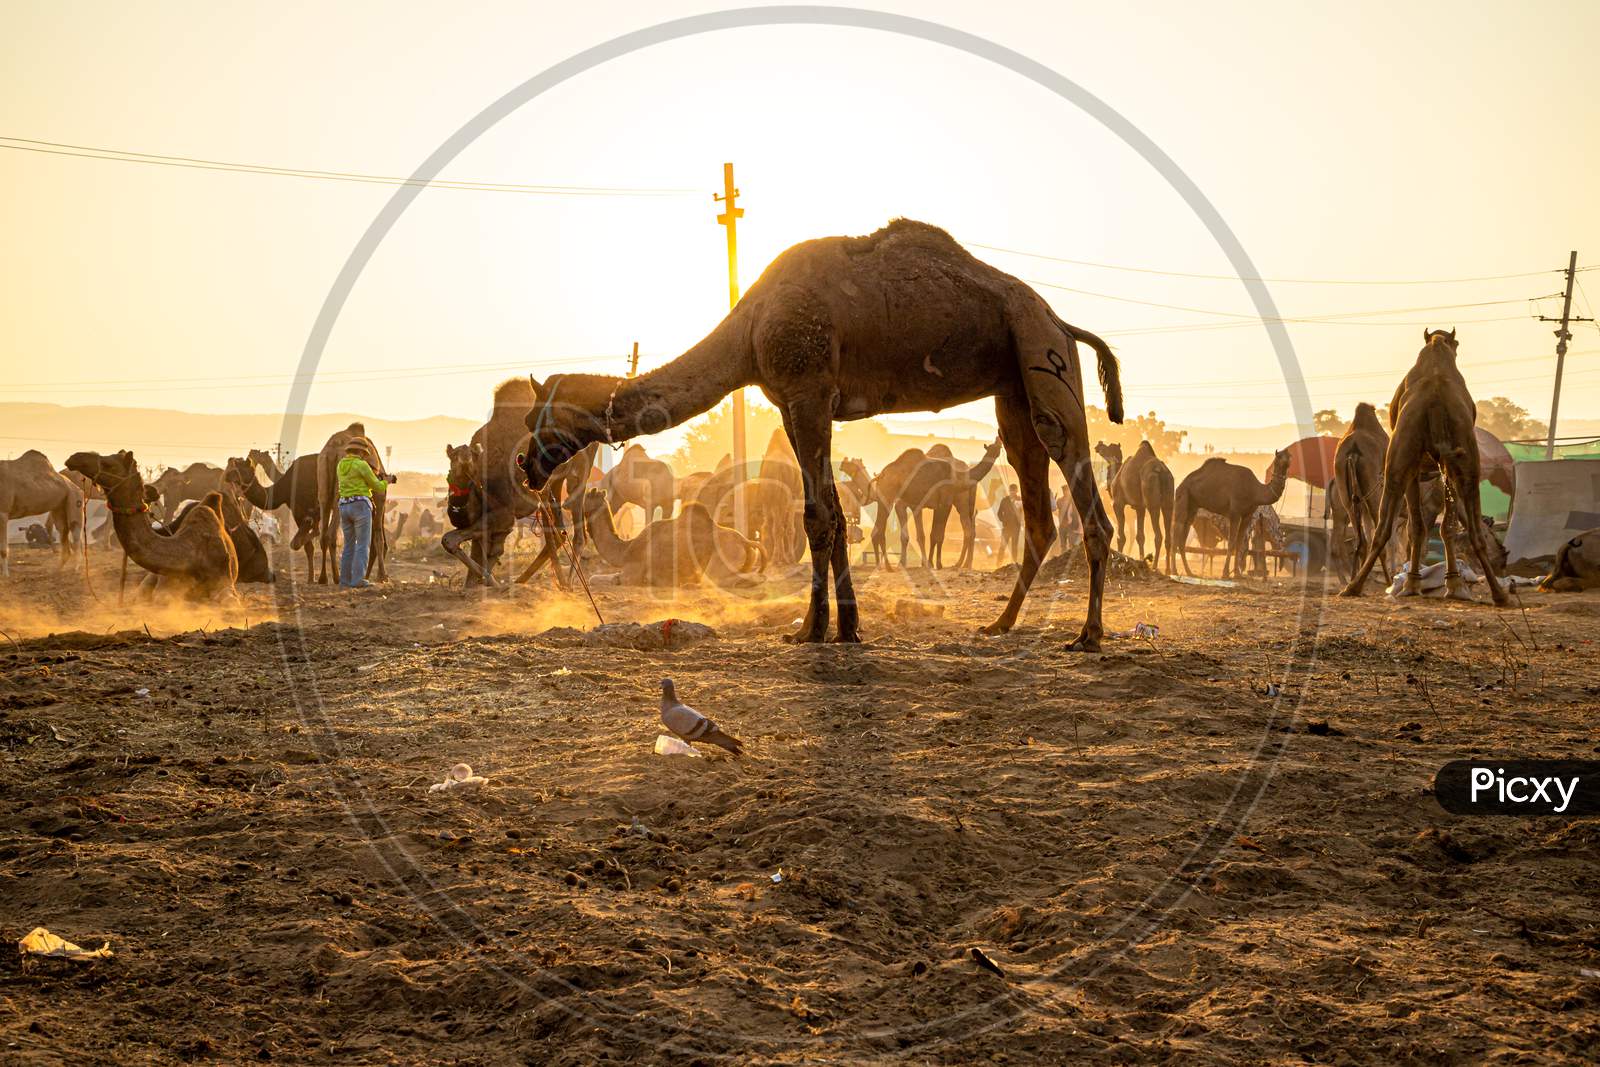 A Camel Herd And Golden Sunrays At Pushkar Camel Festival.